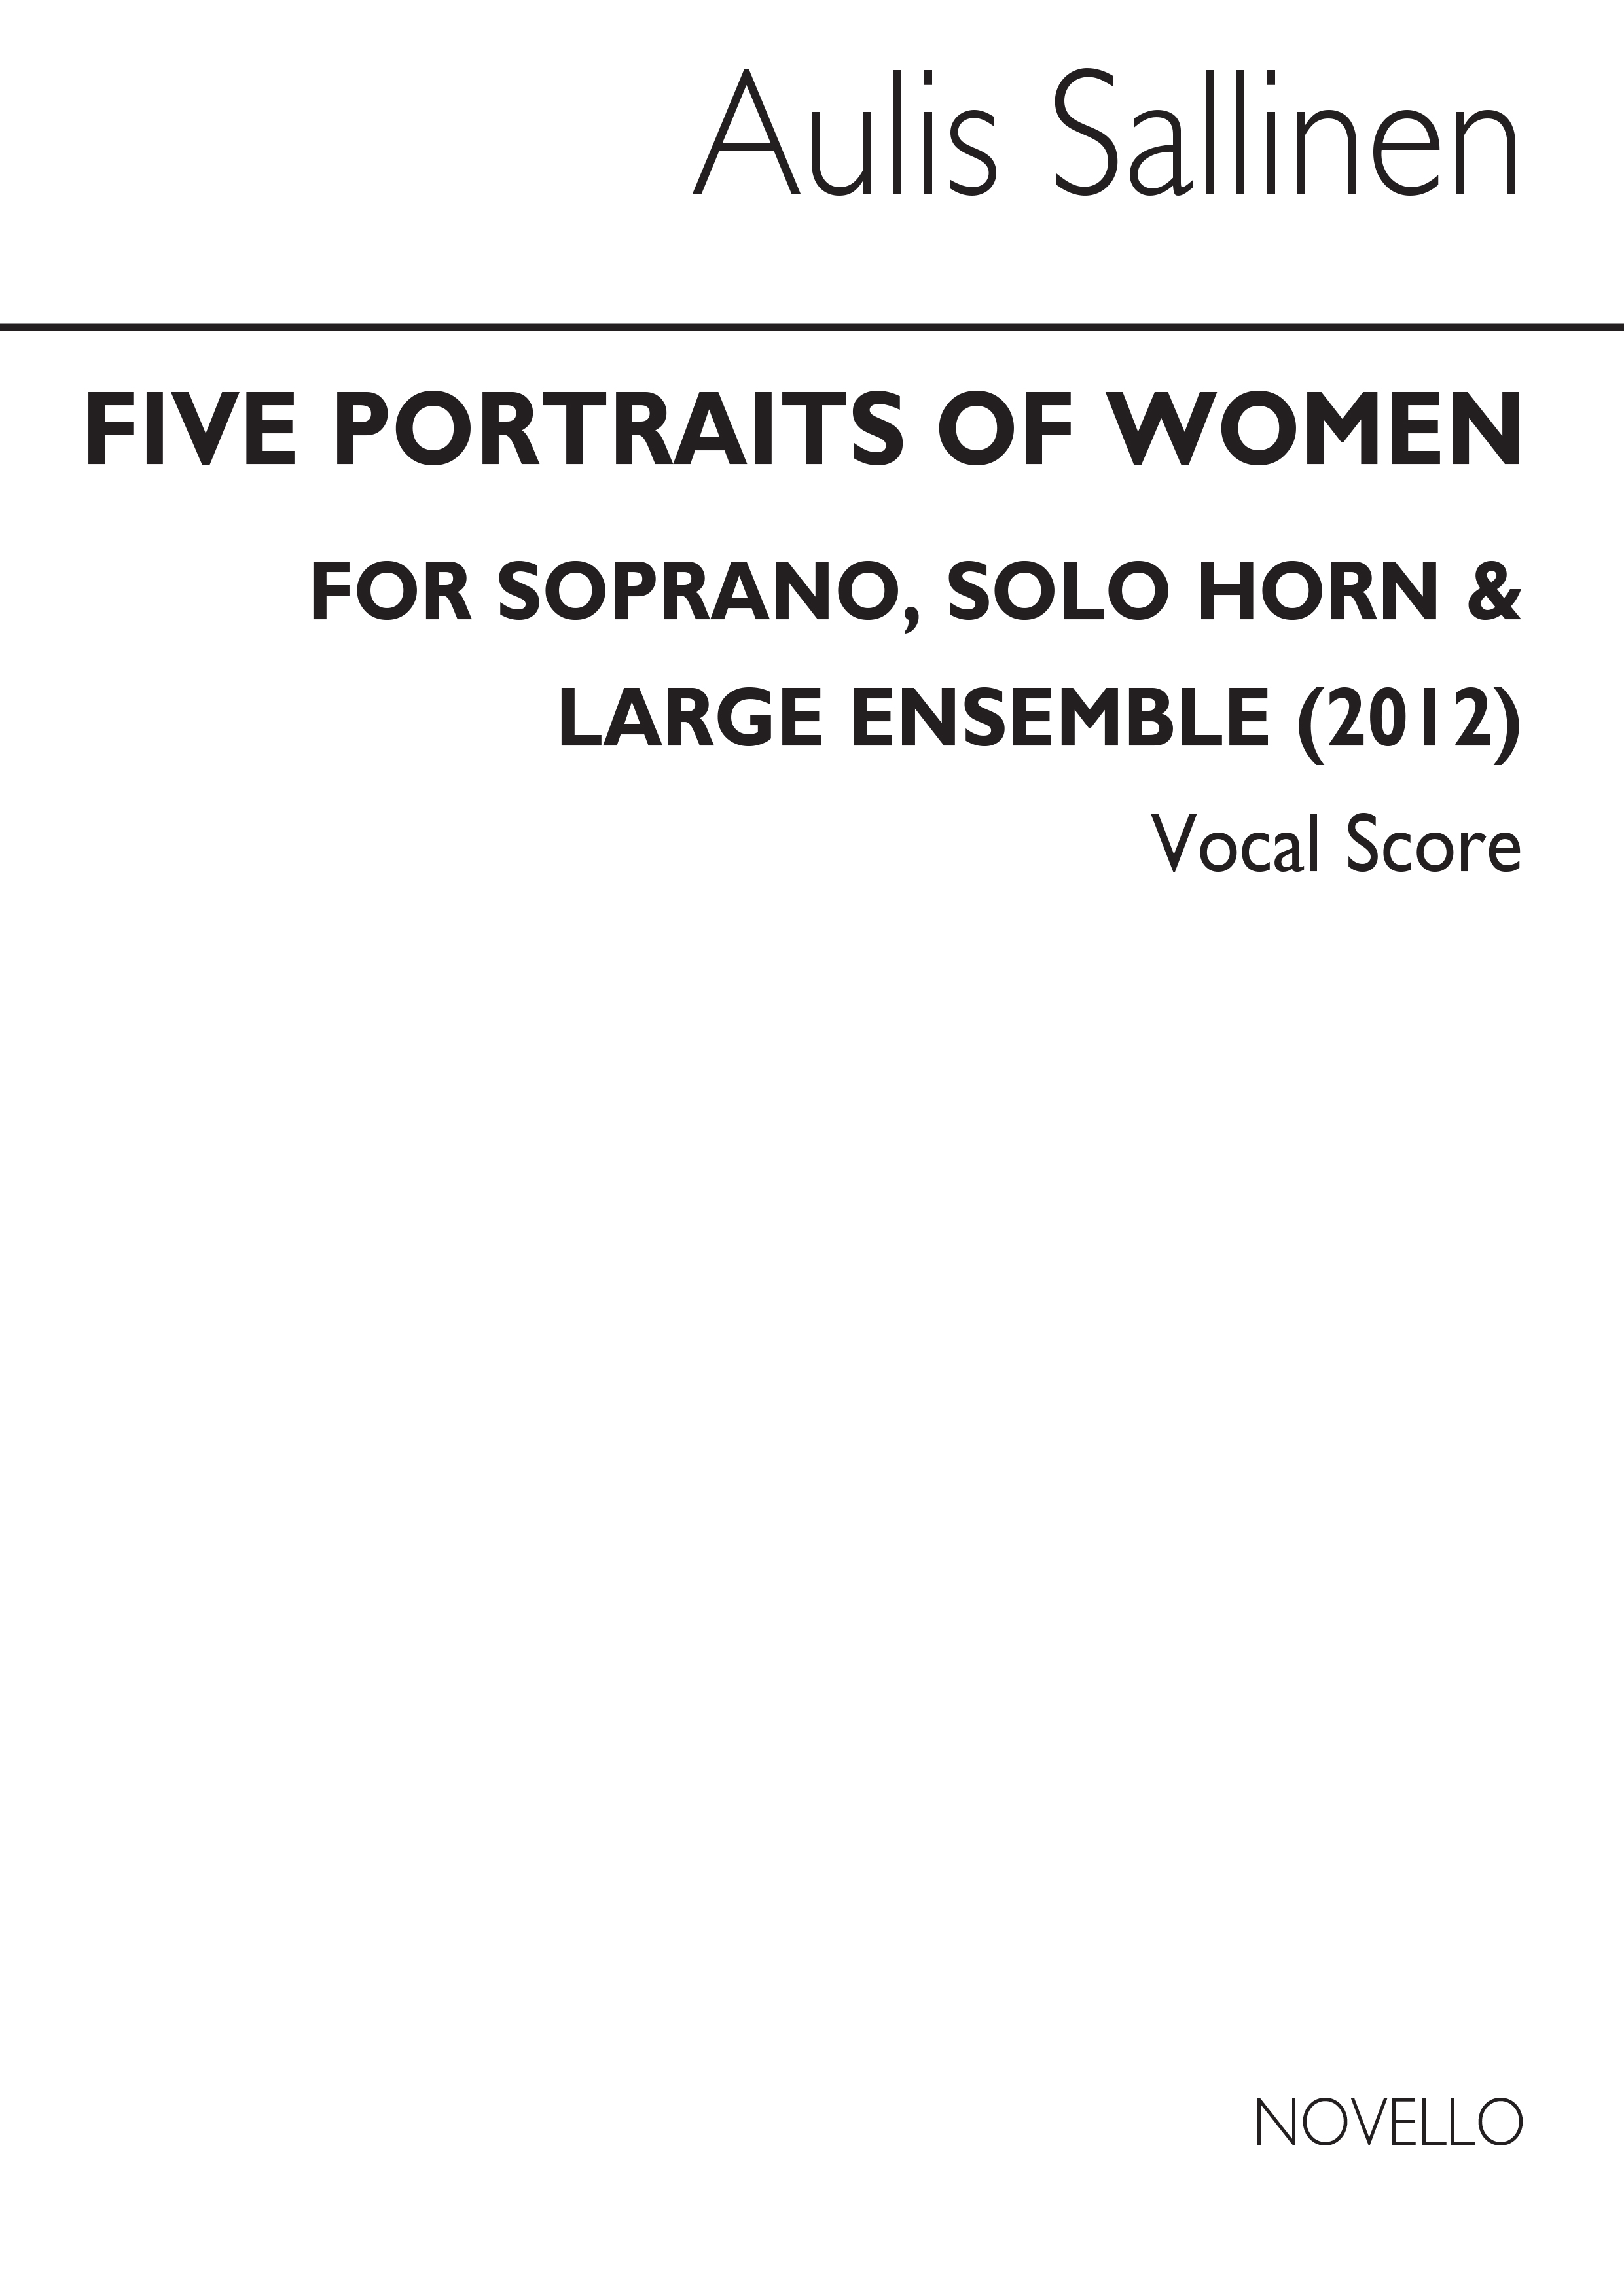 Aulis Sallinen: Five Portraits of Women: Soprano: Vocal Score